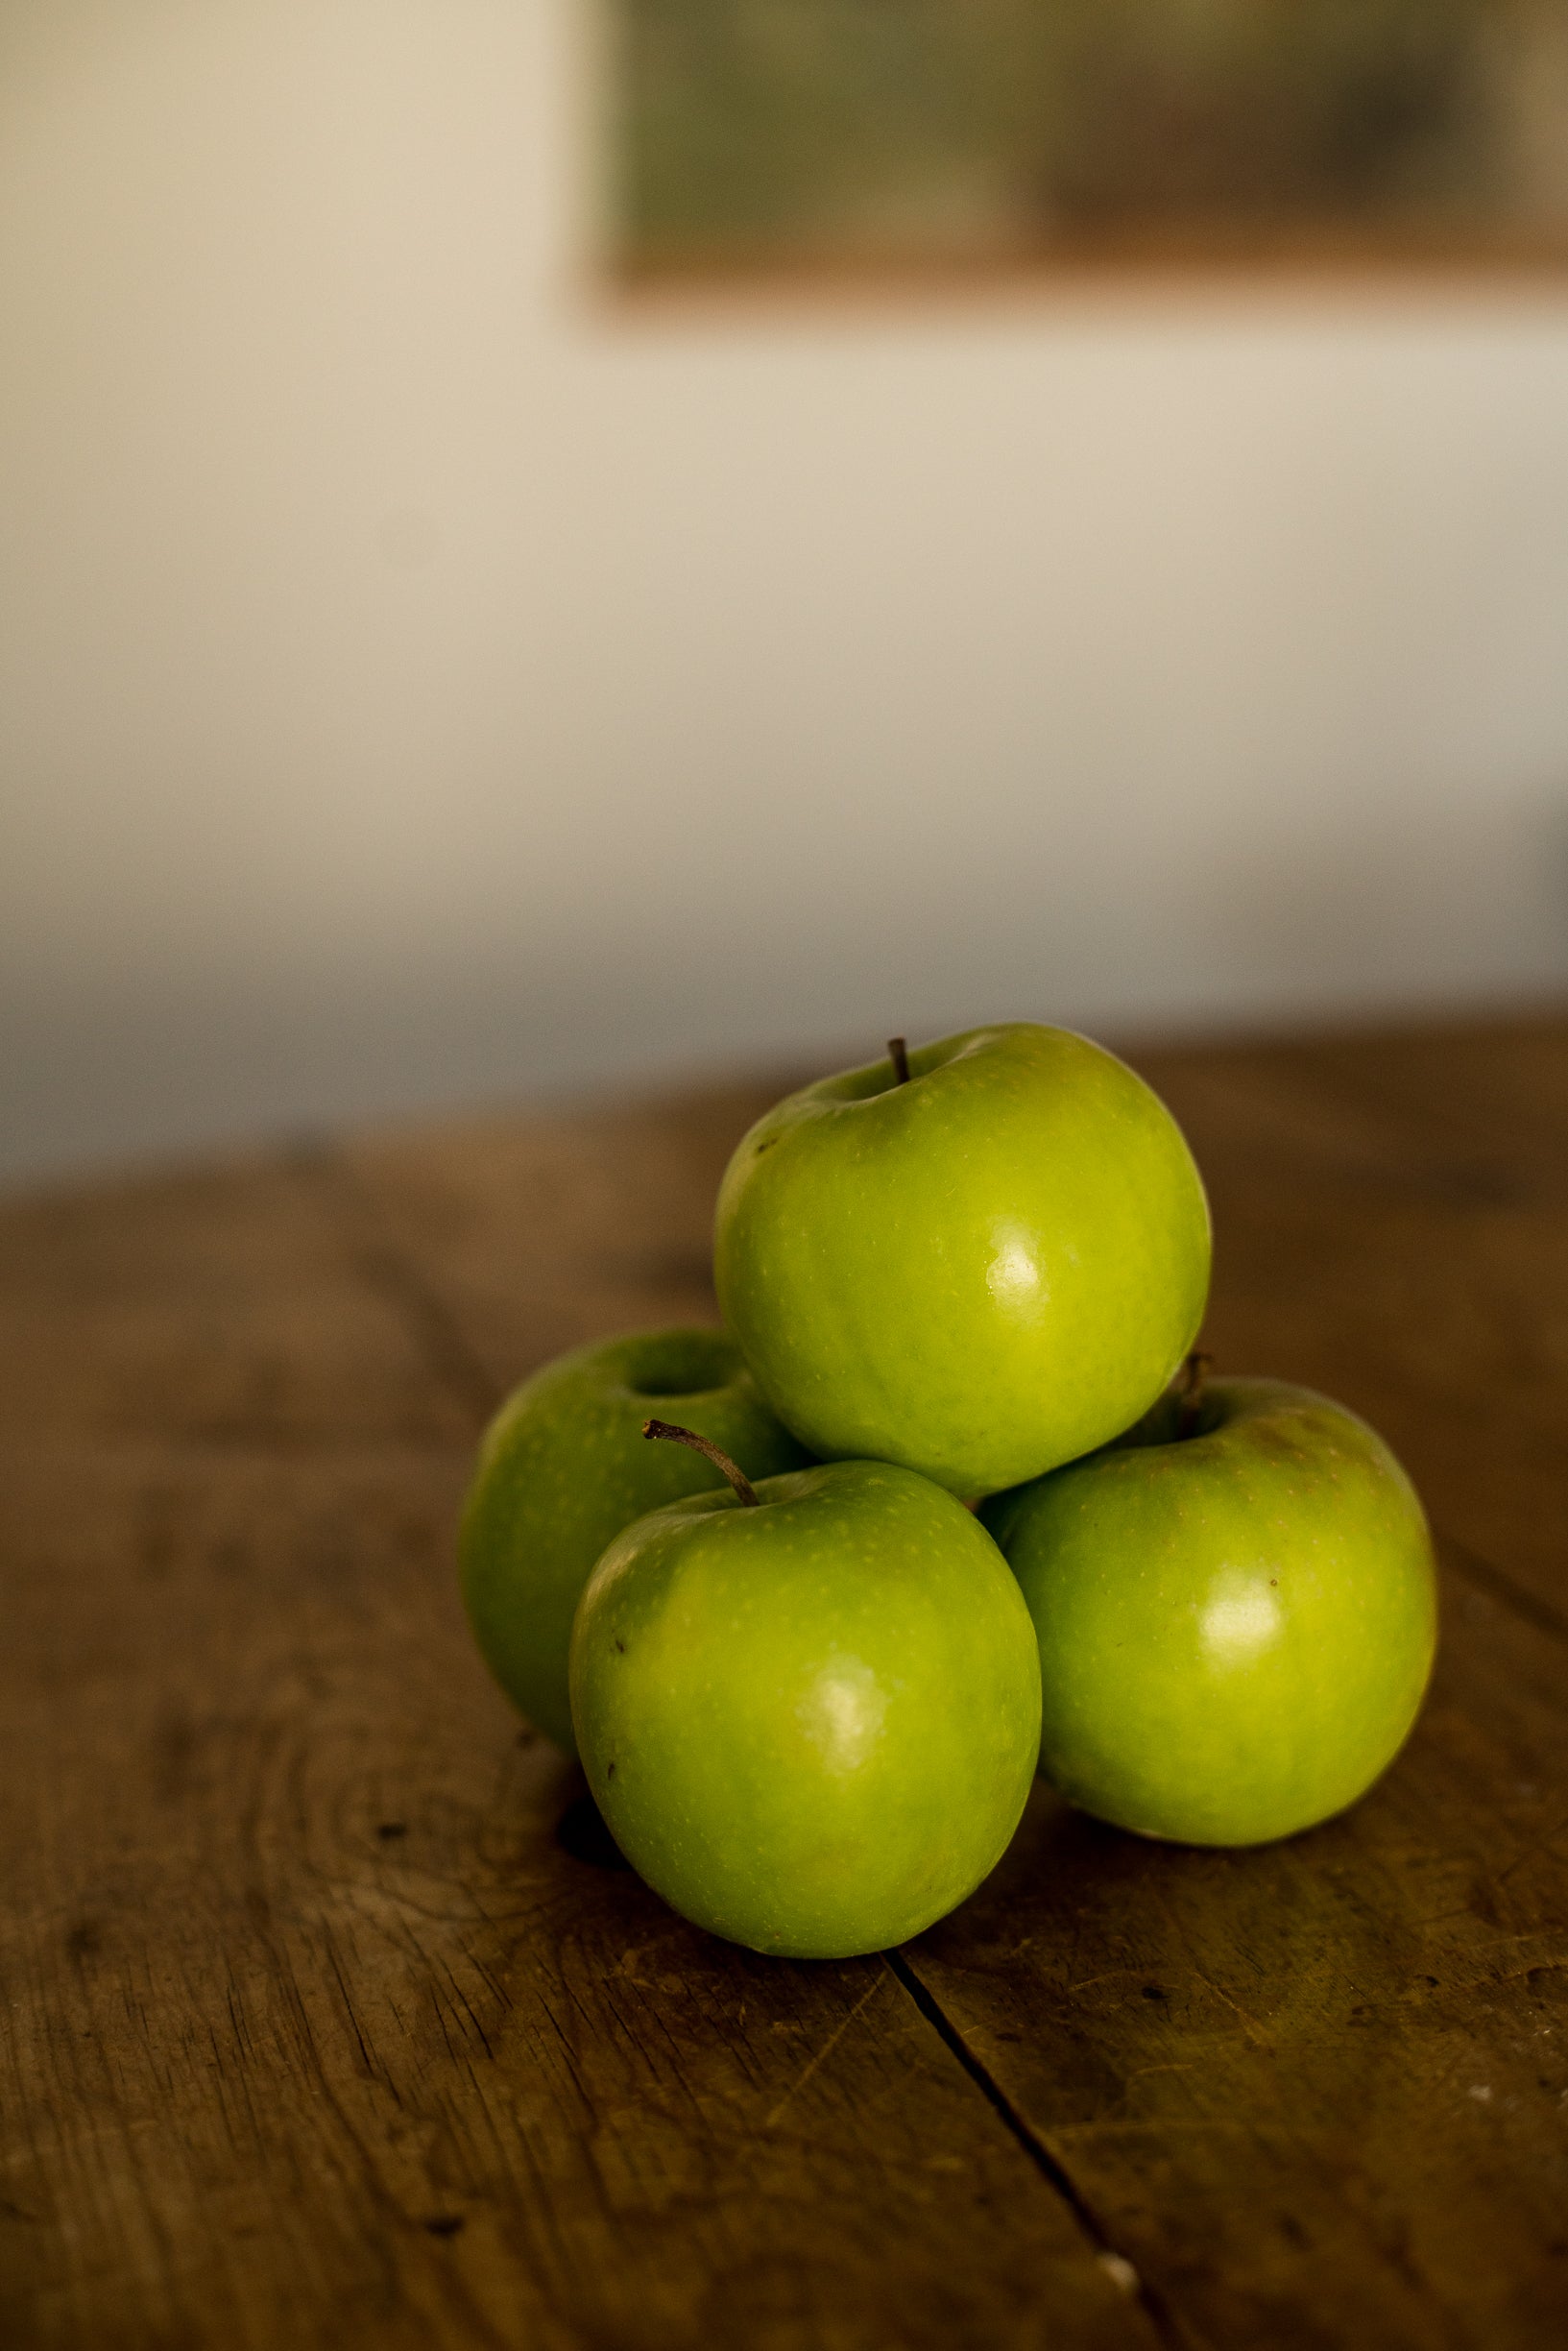 Organic Granny Smith Apples – 1 Dozen